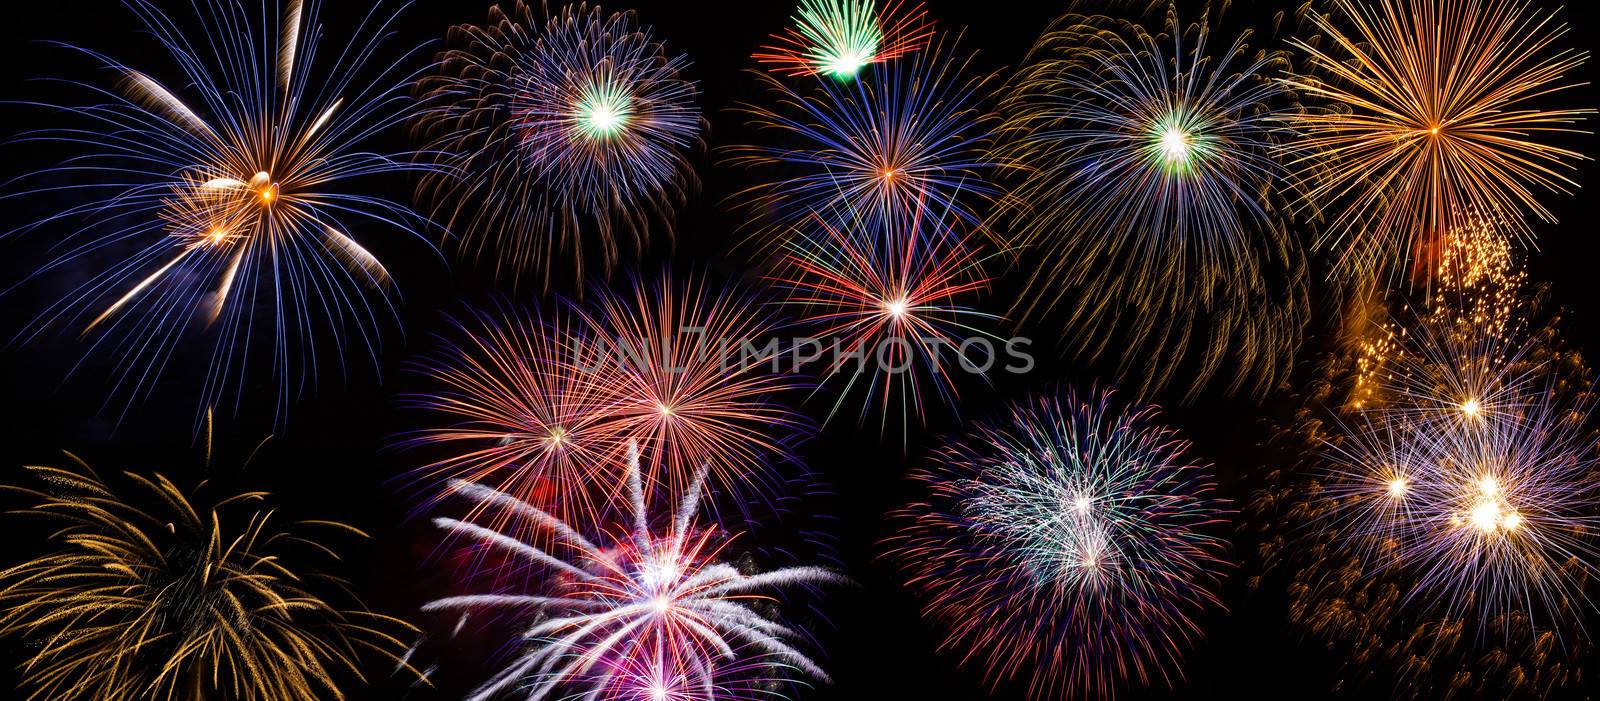 Fireworks Background by Cursedsenses